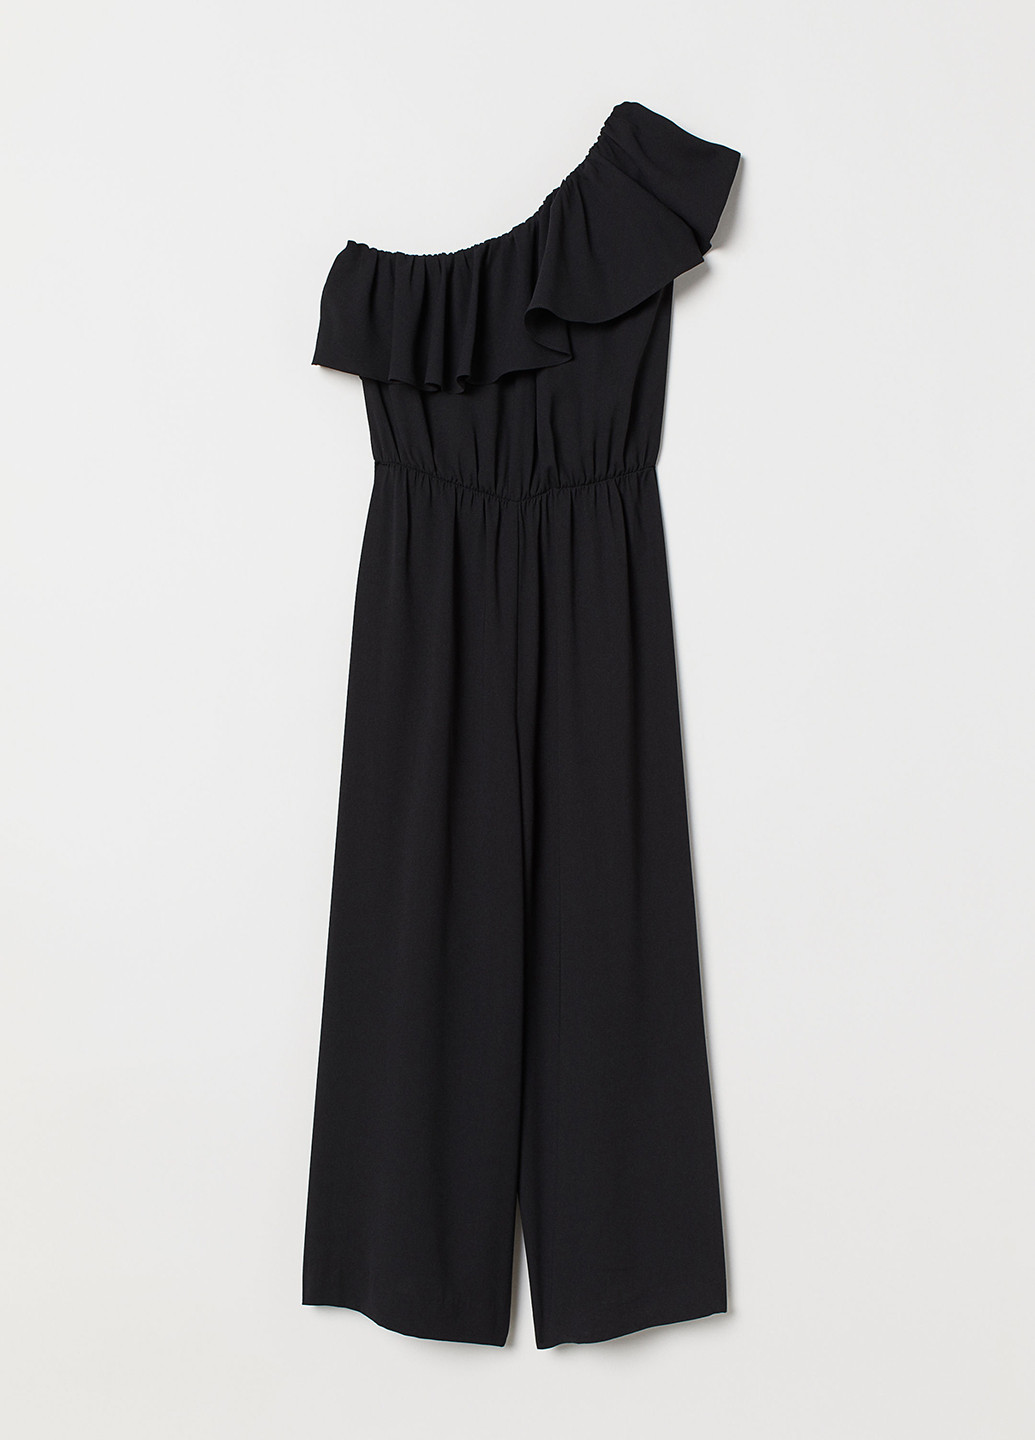 Комбинезон H&M комбинезон-брюки чёрный кэжуал полиэстер